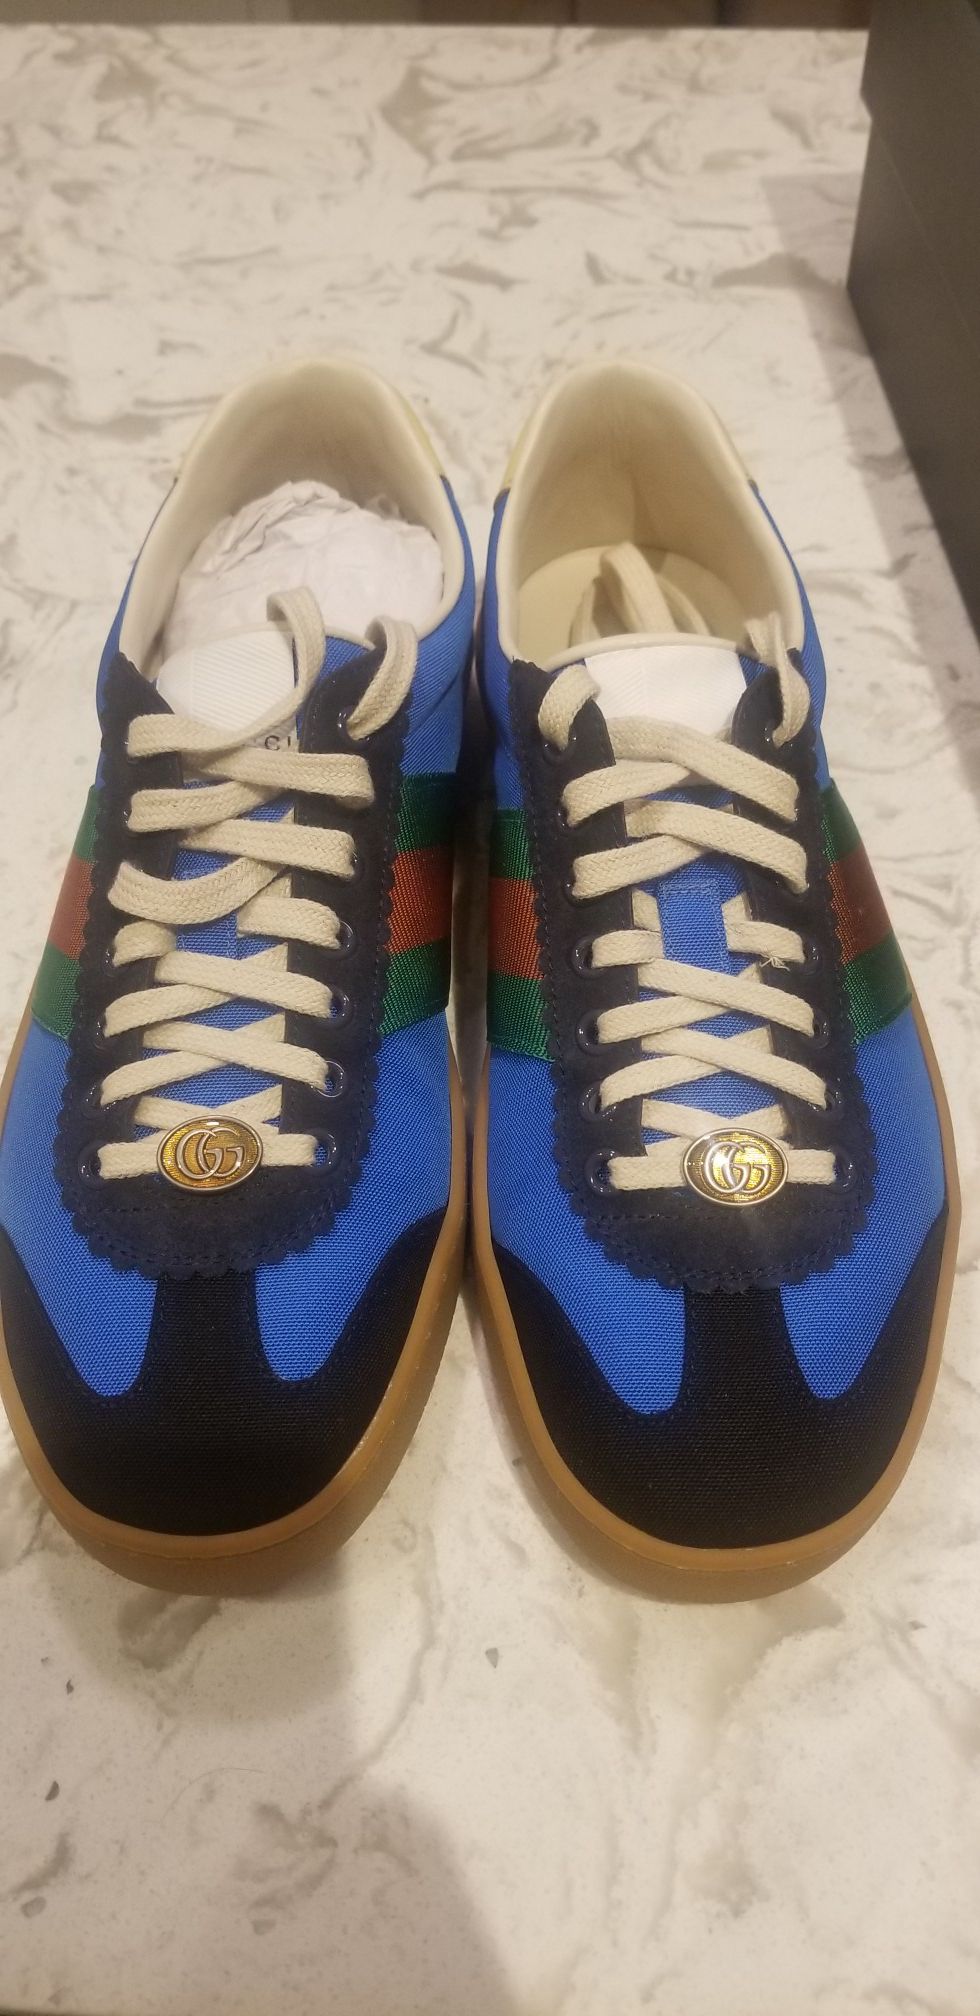 Gucci G74 Nylon Sneaker "Bright Blue" Gucci Size 8 Fits 9 or 9.5 Men Firm @ $400